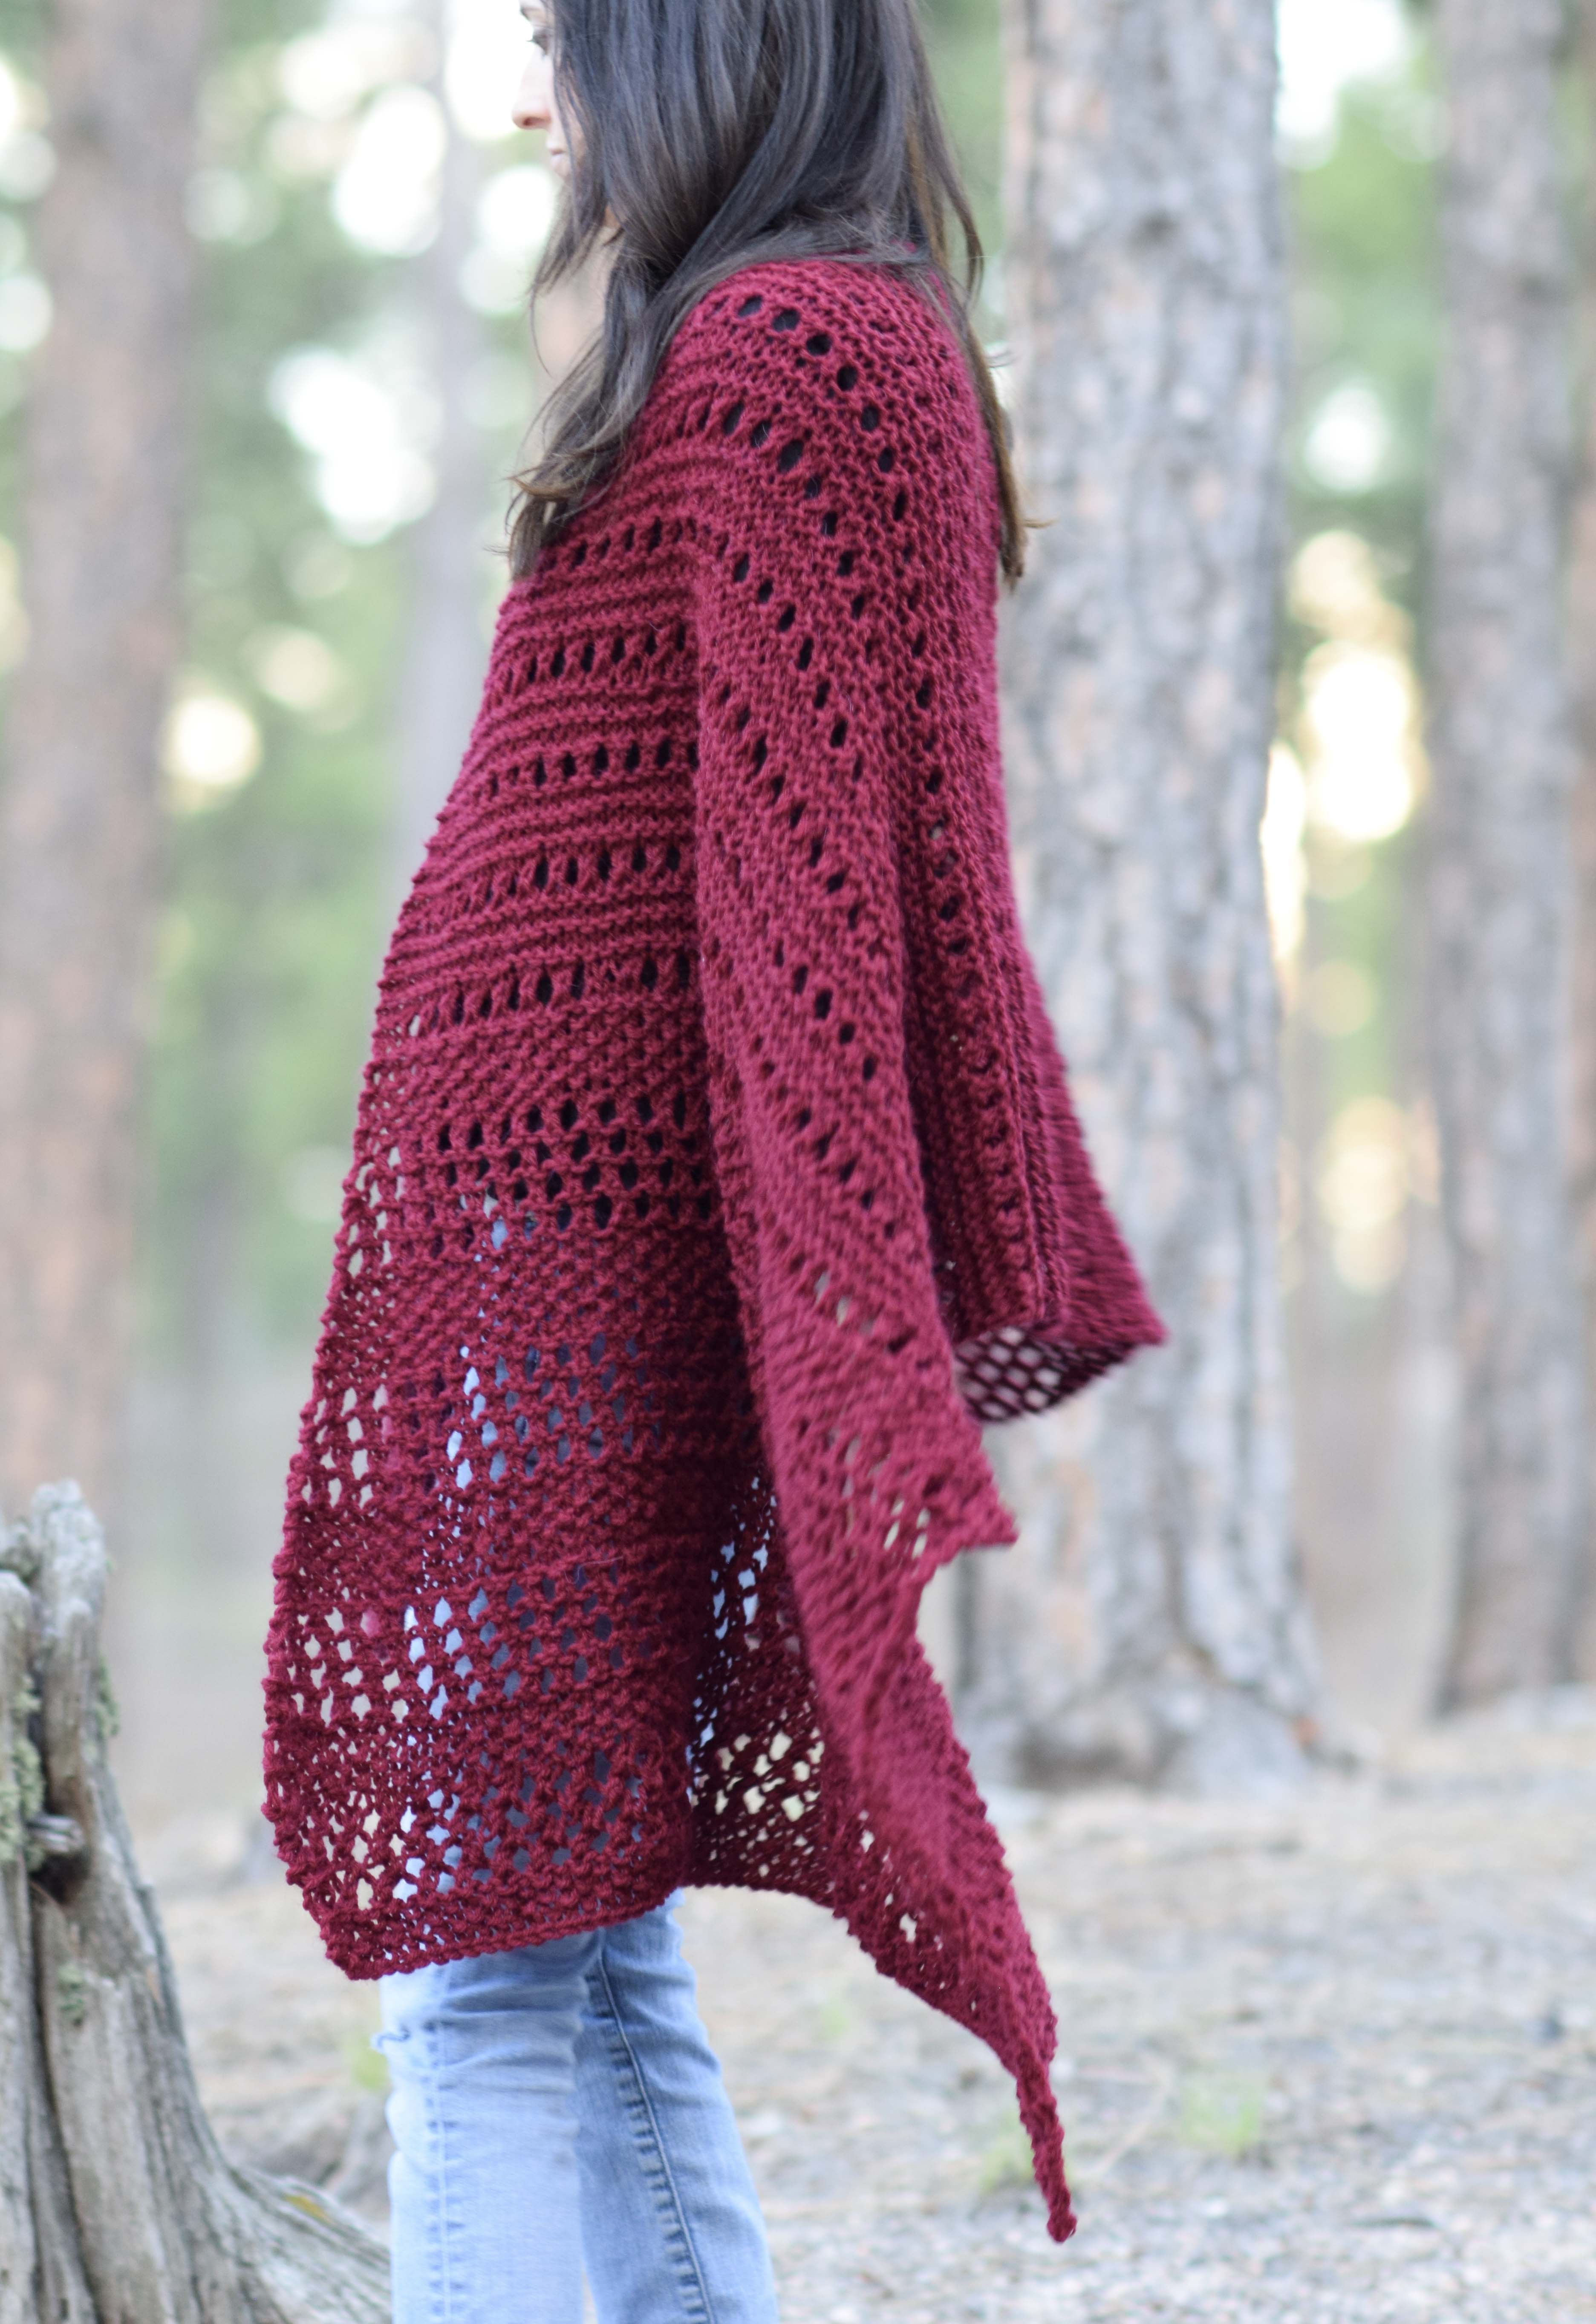 Free Patterns For Knitted Shawls Merlot Alpaca Wrap Shawl Knitting Pattern Mama In A Stitch